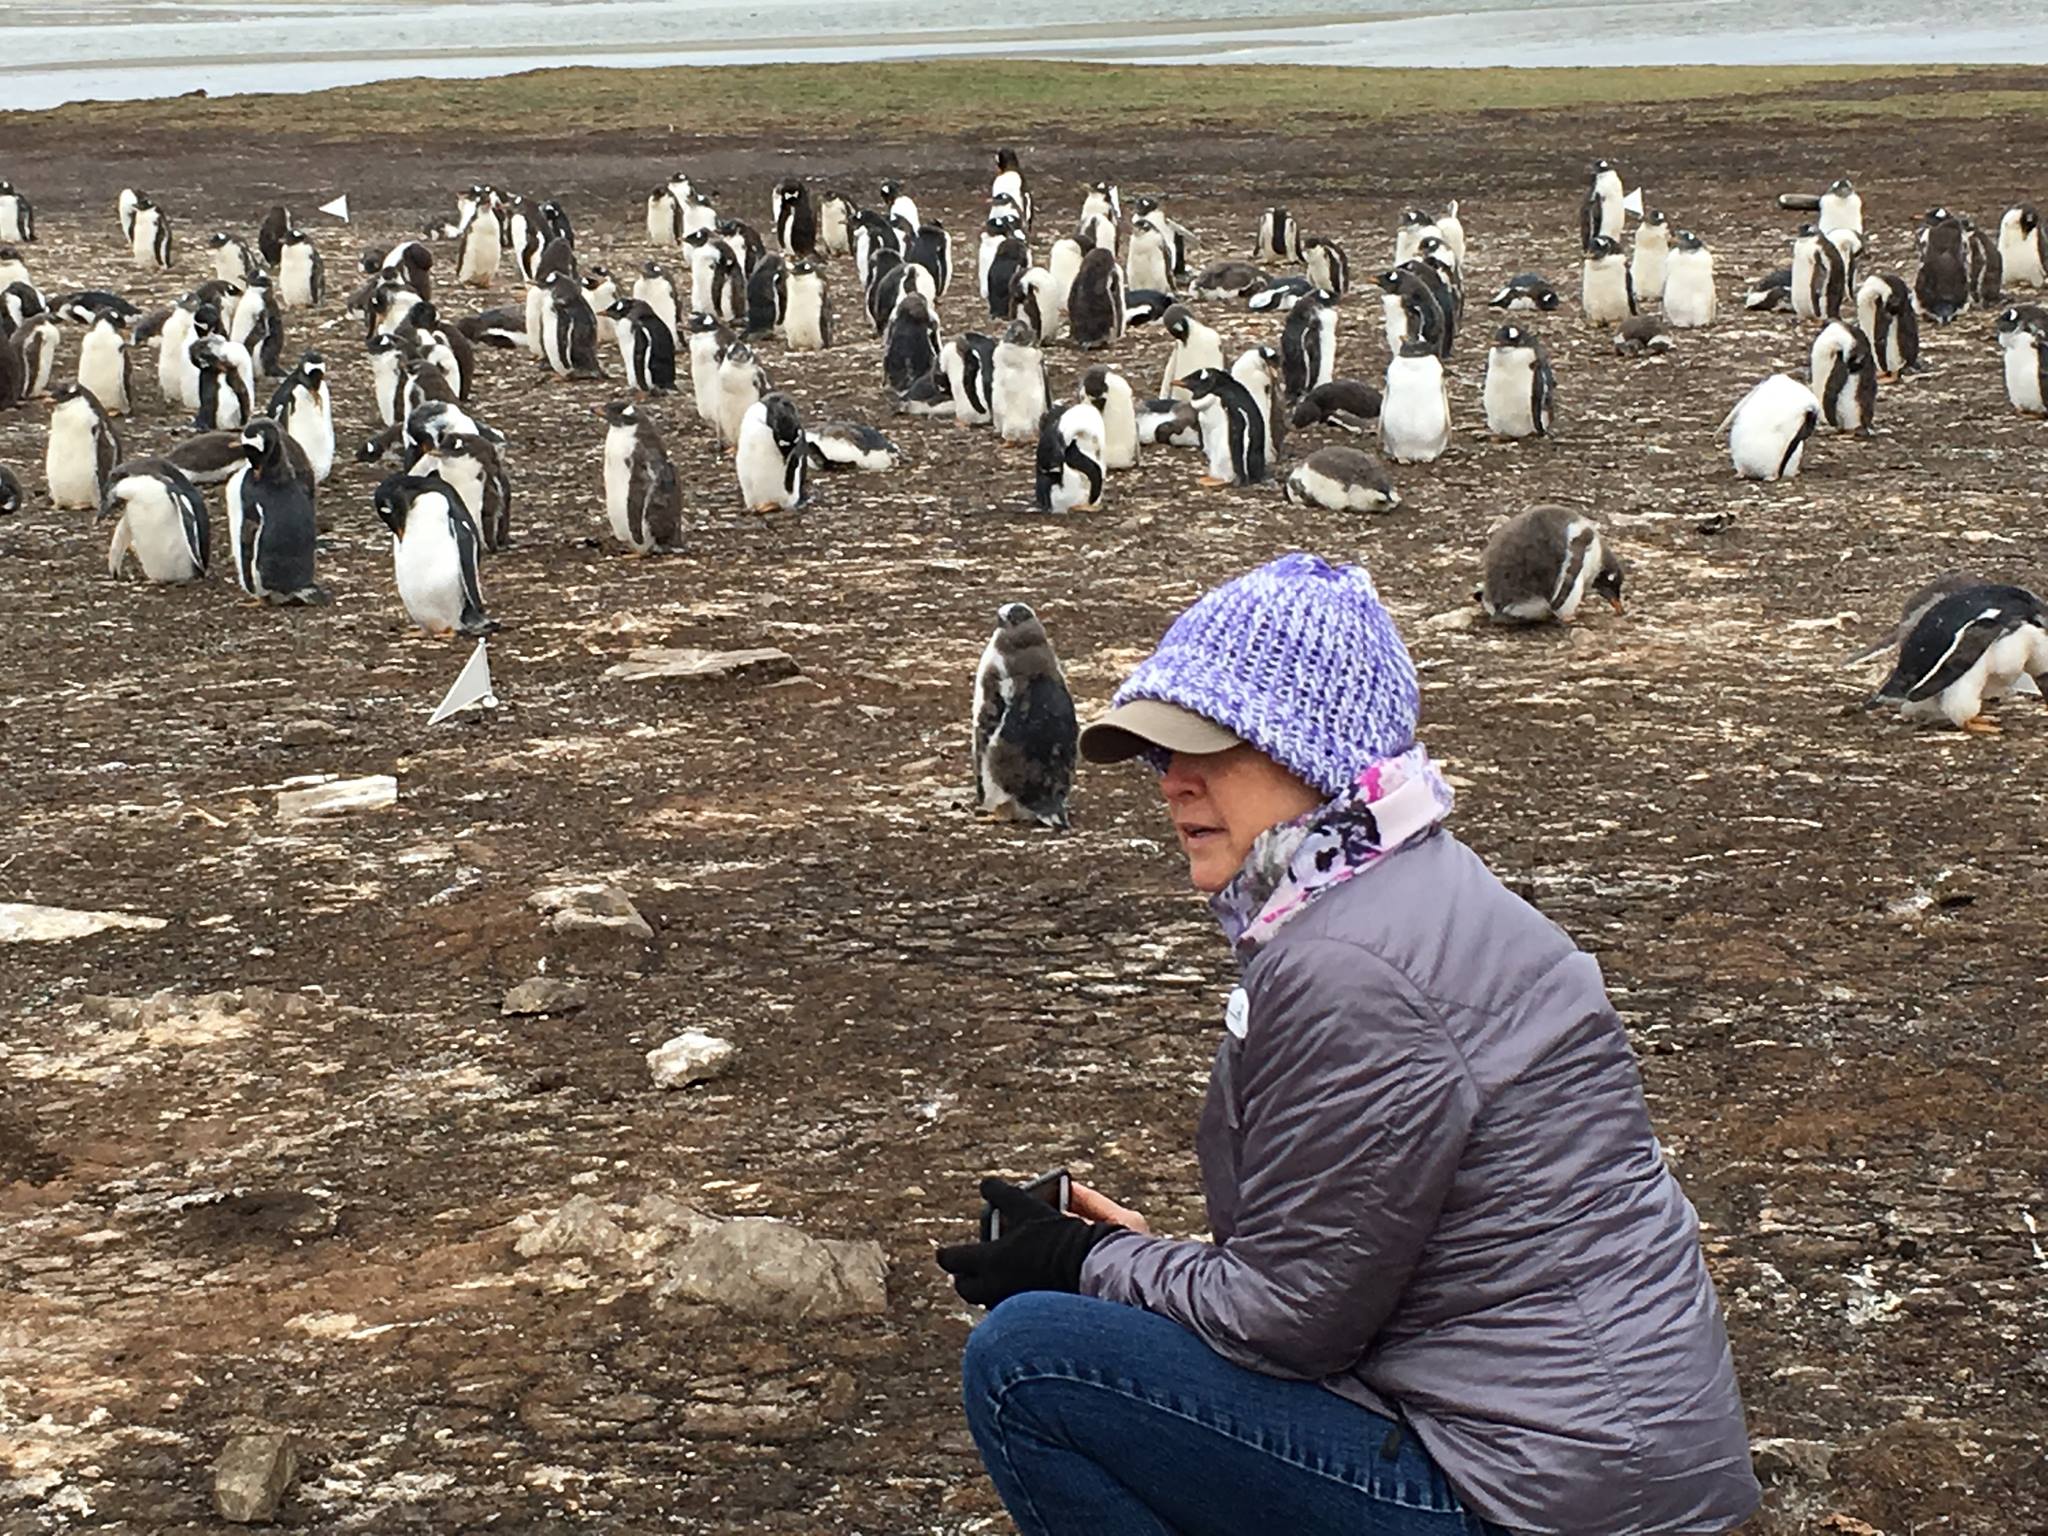 Jill artic with penguins.jpg